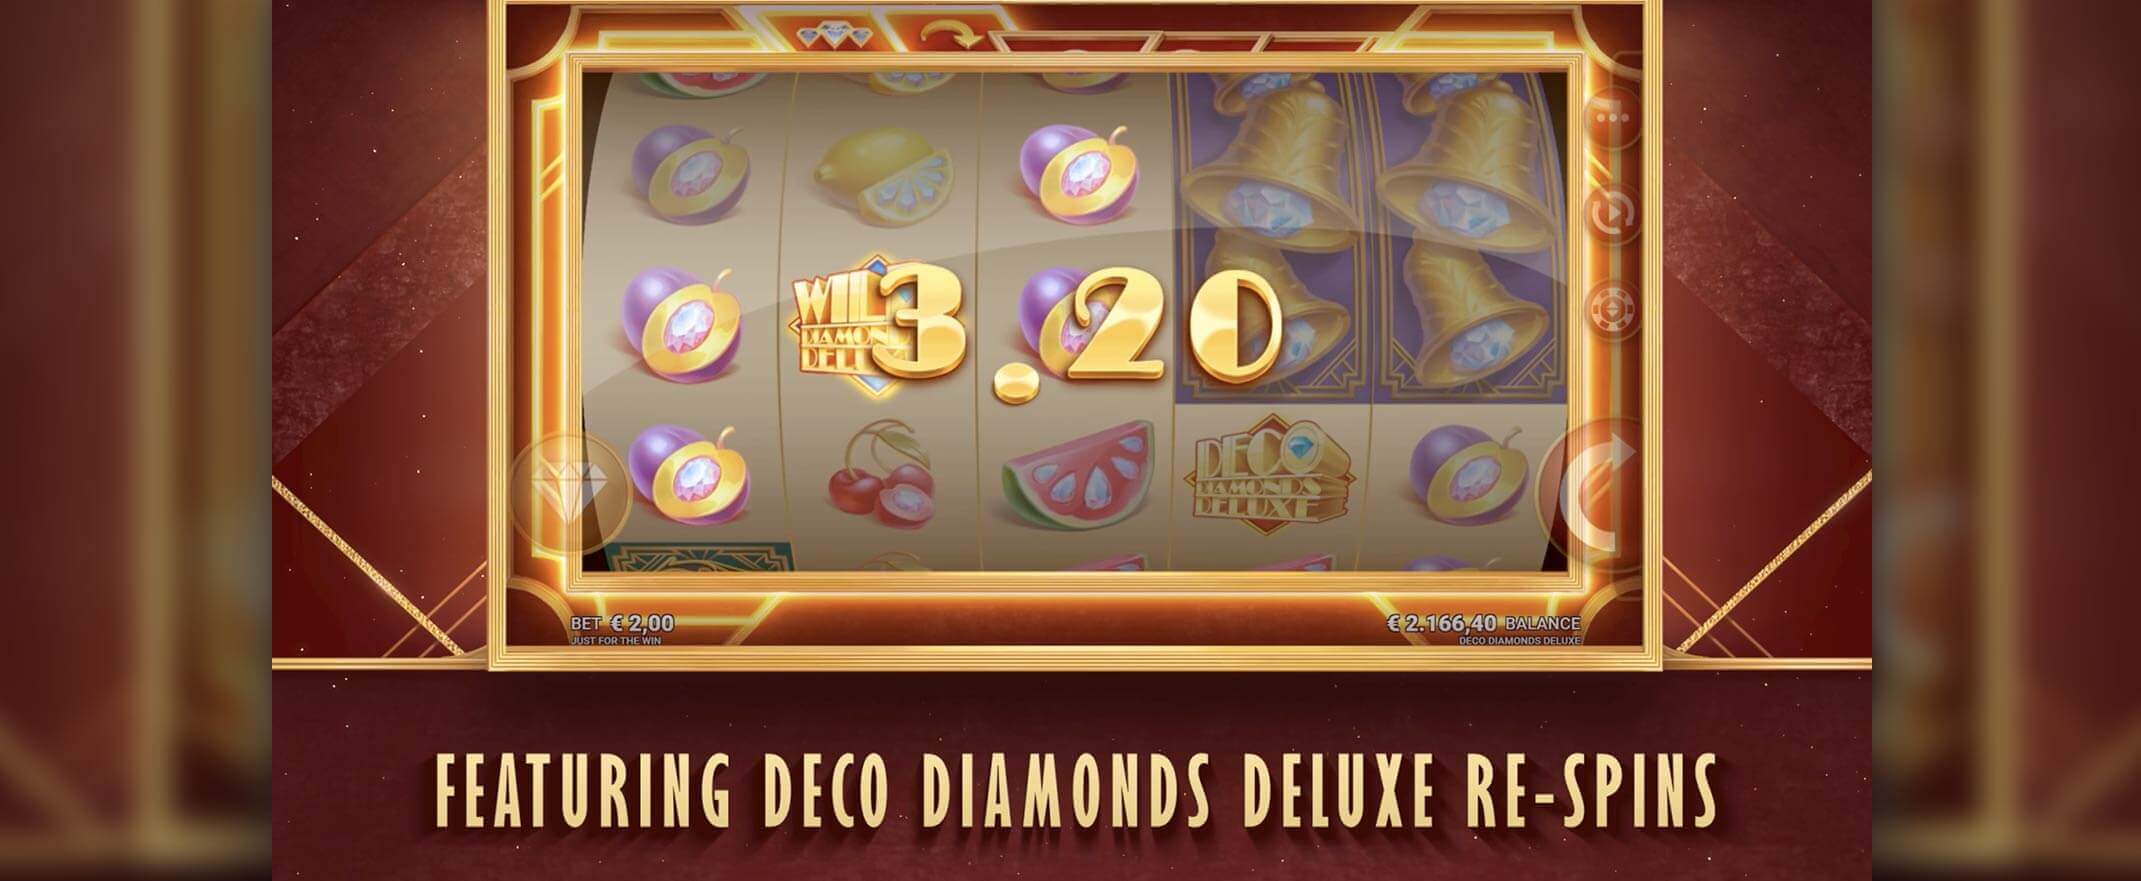 Deco Diamonds Spilleautomat